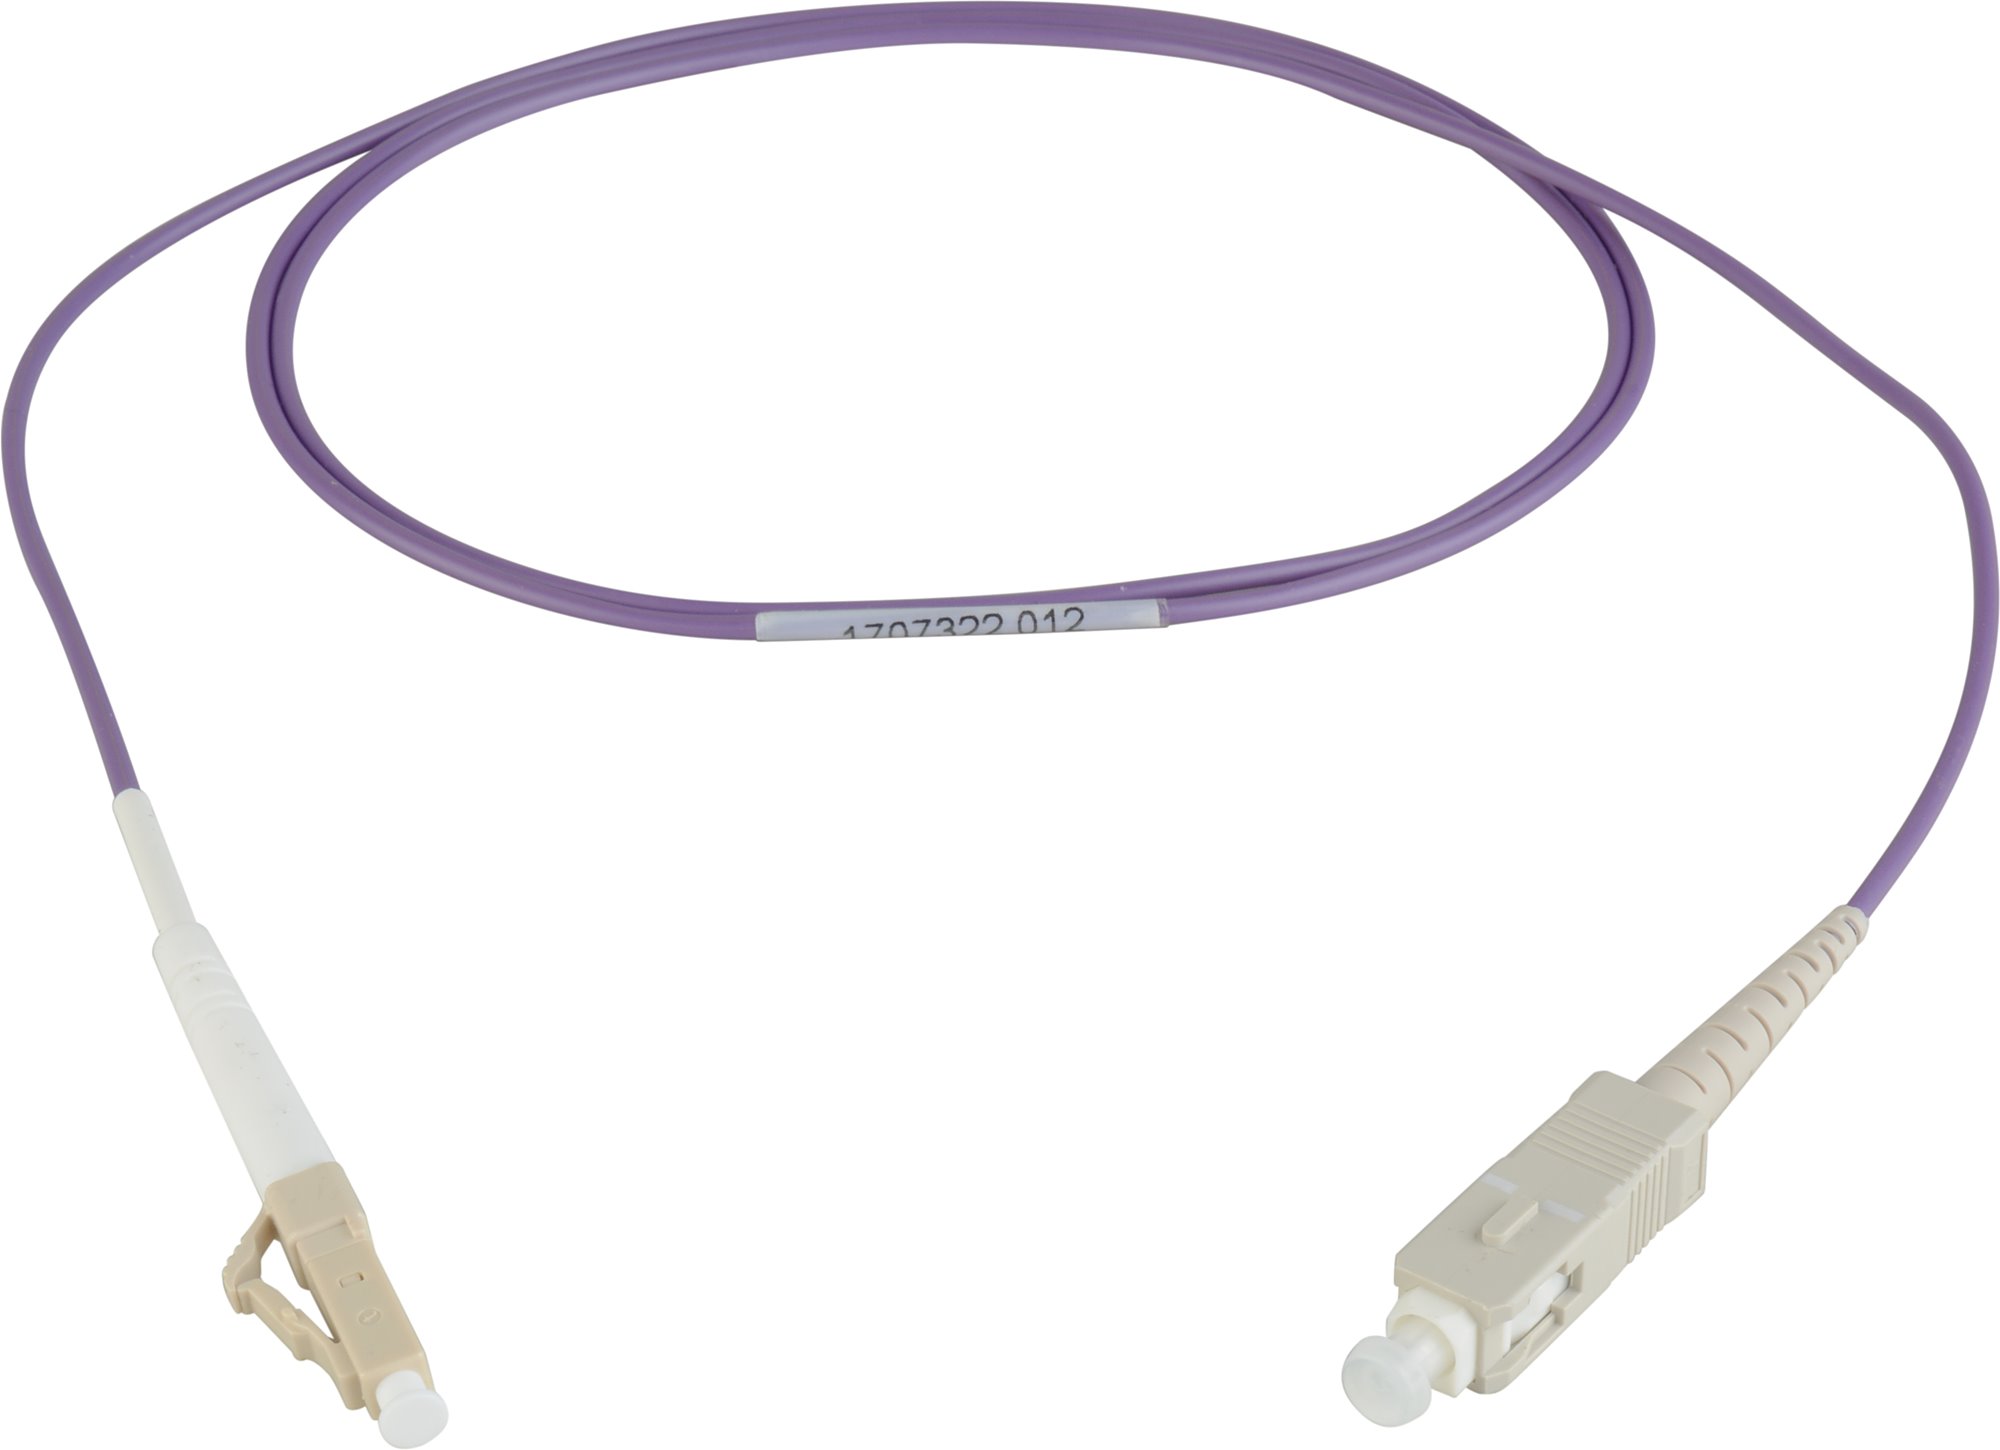 Camplex MMD50-LC-LC-001 Fiber Optic Patch Cables Multimode Duplex LC to LC Fiber